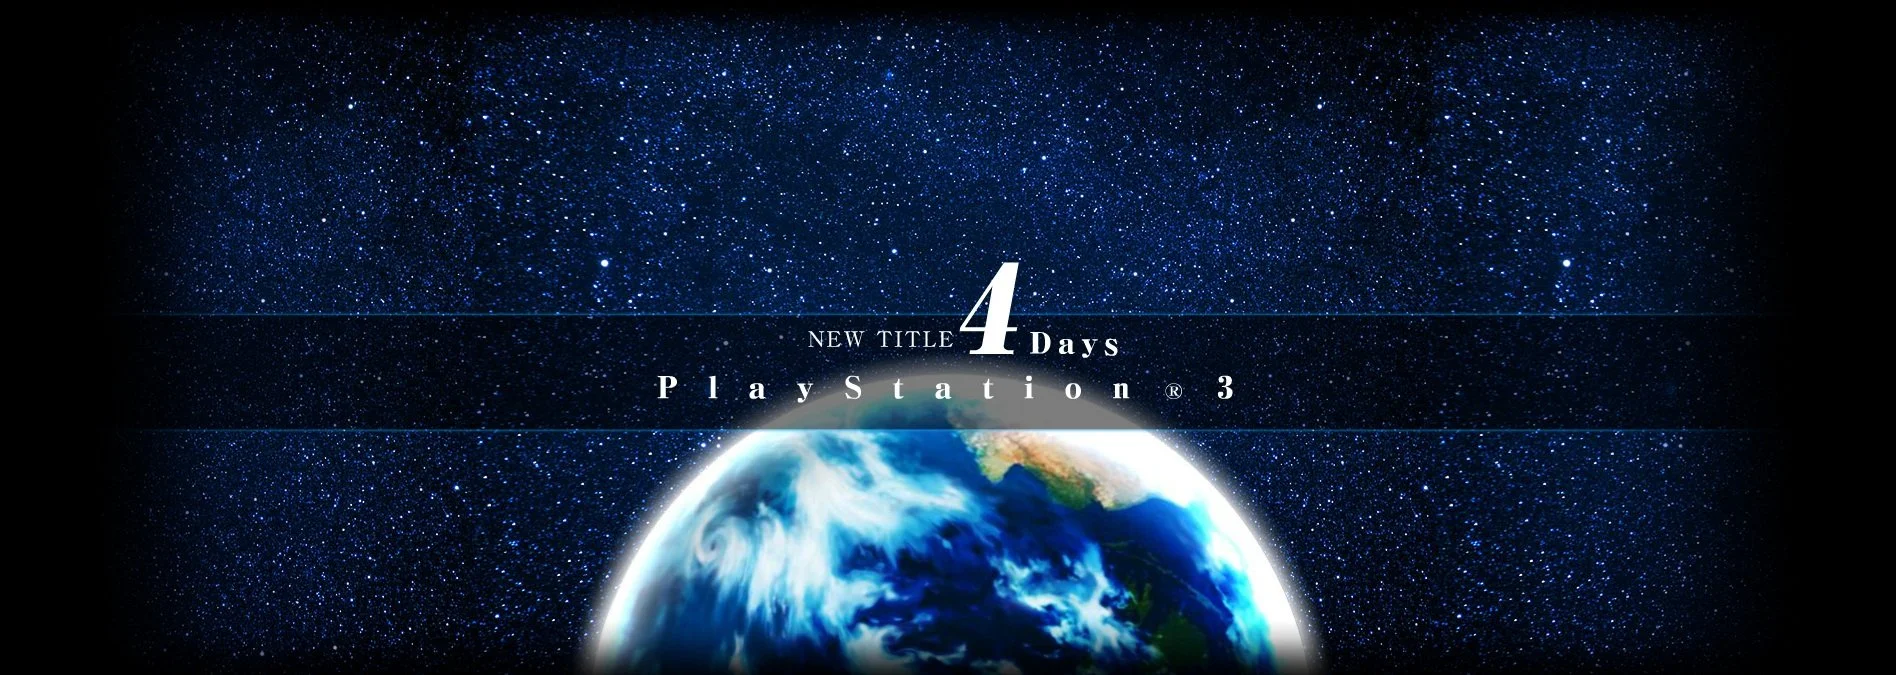 Namco Bandai покажут свою новую игру для PlayStation 3 через 4 дня - фото 1